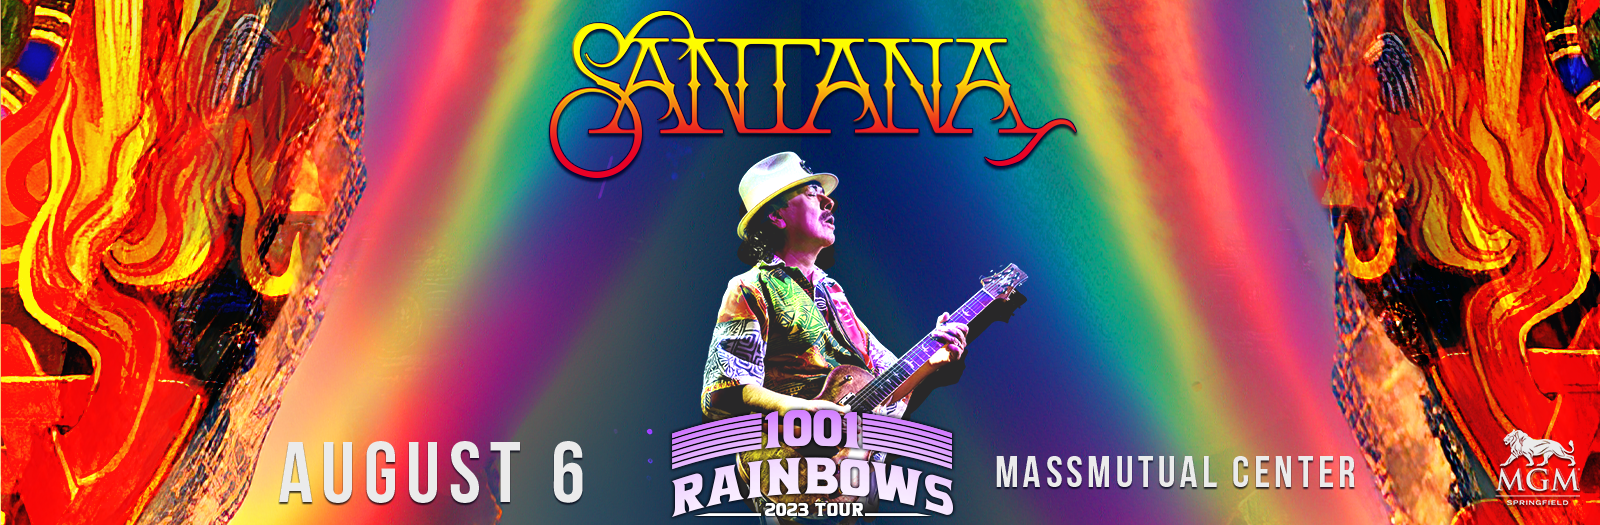 carlos santana rainbows tour